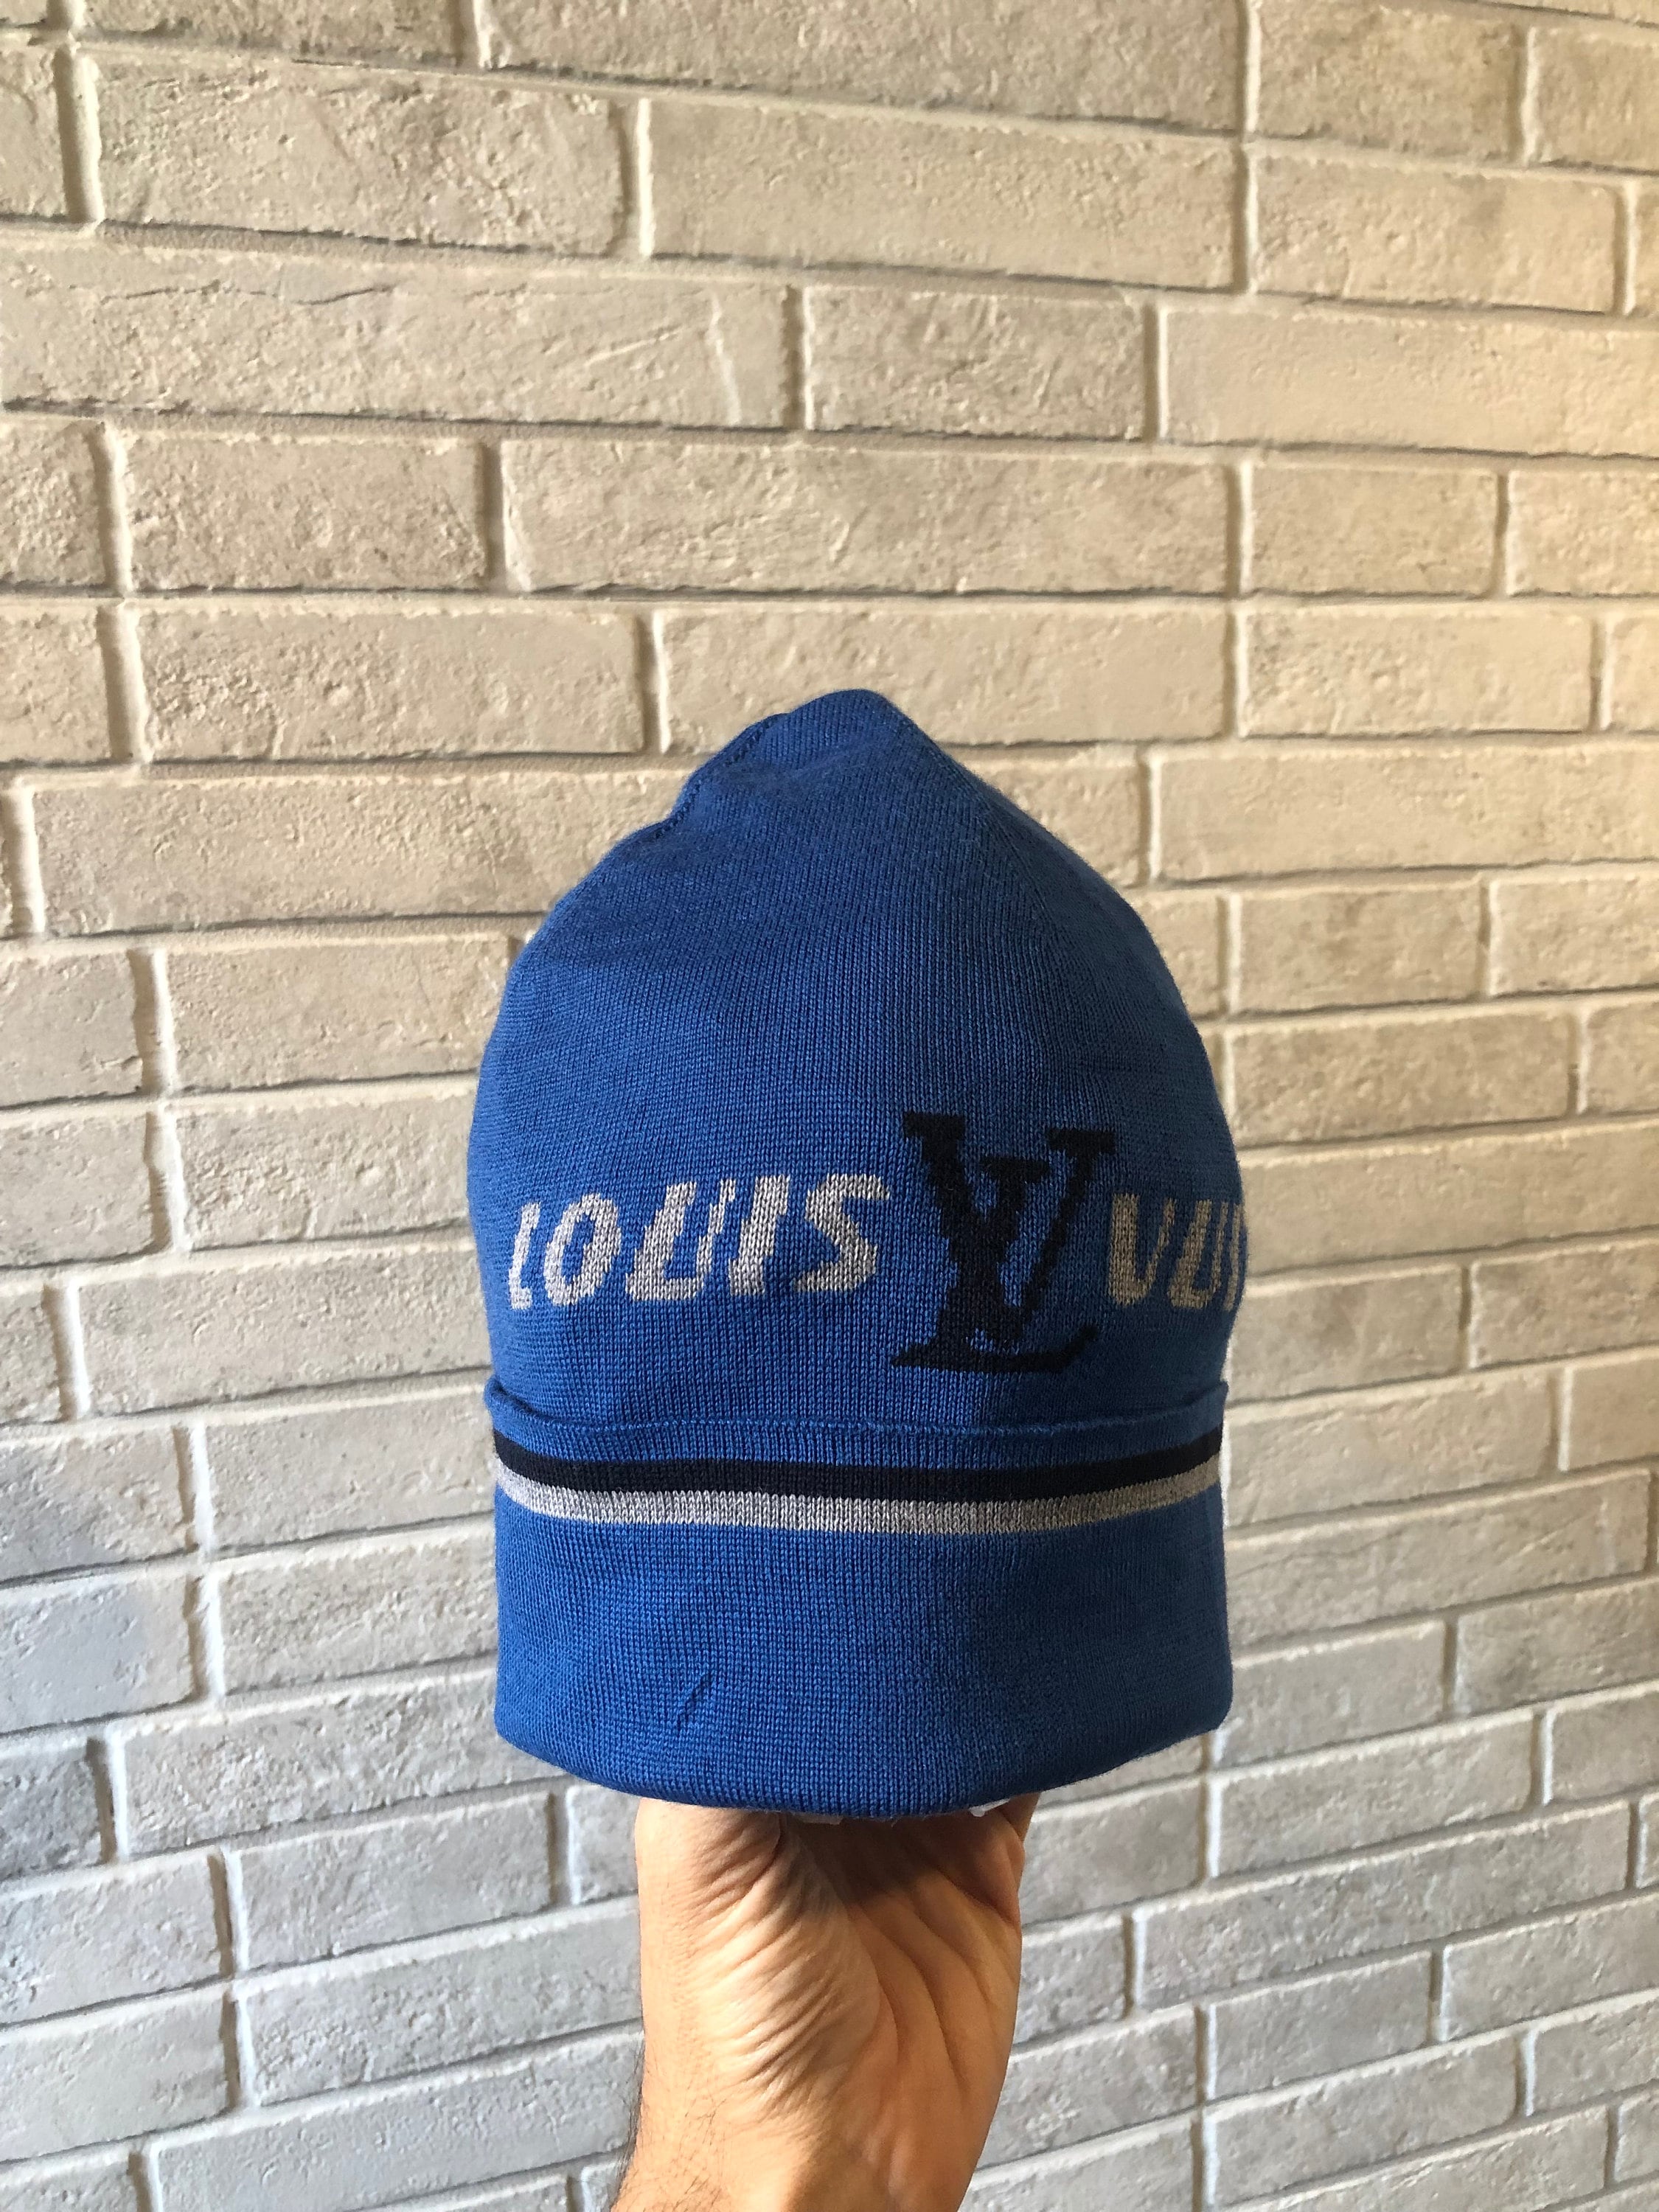 LOUIS VUITTON BRAND New. Monogram Eclipse Beanie Knit cap hat